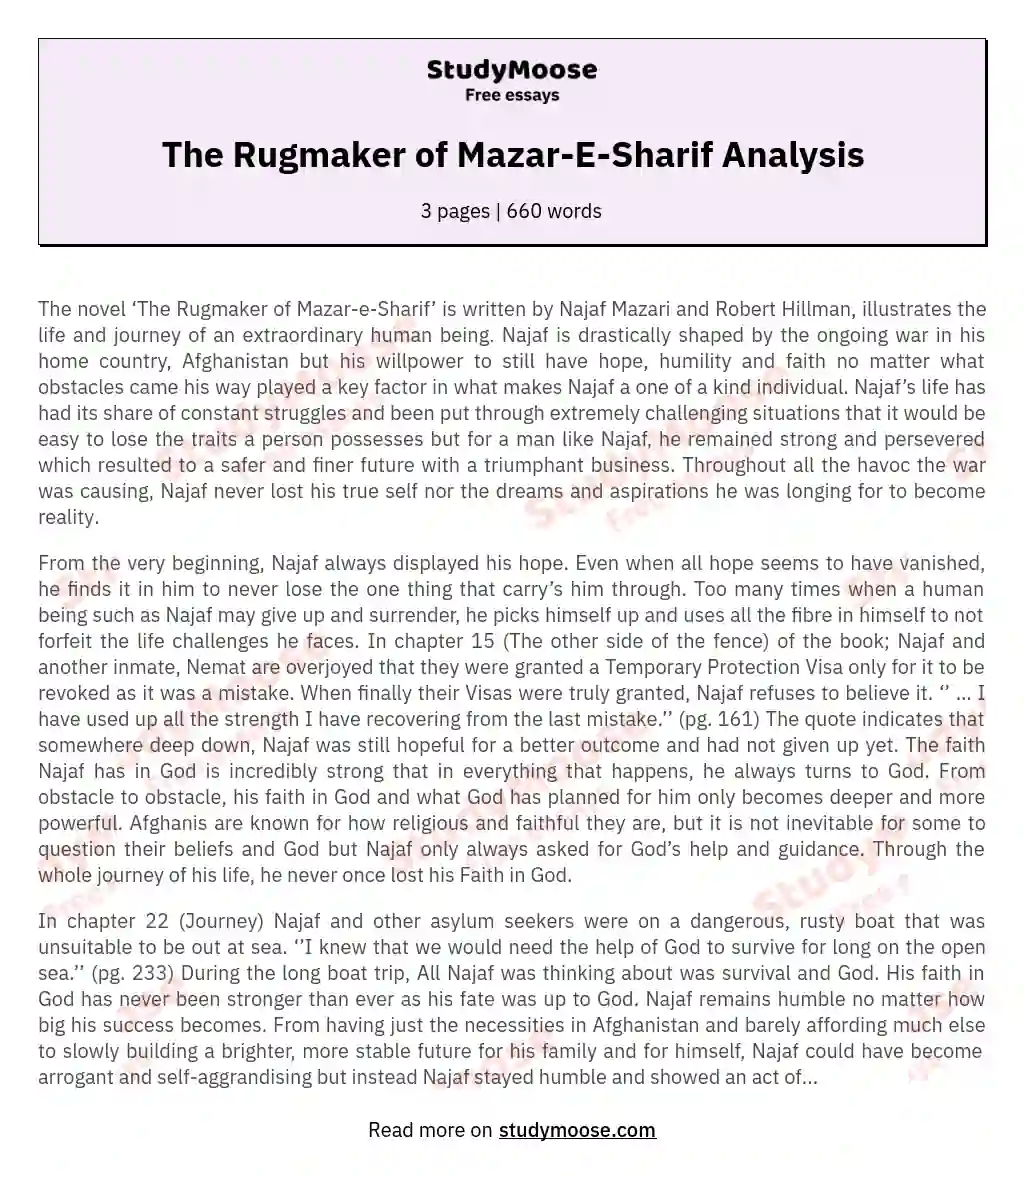 The Rugmaker of Mazar-E-Sharif Analysis essay